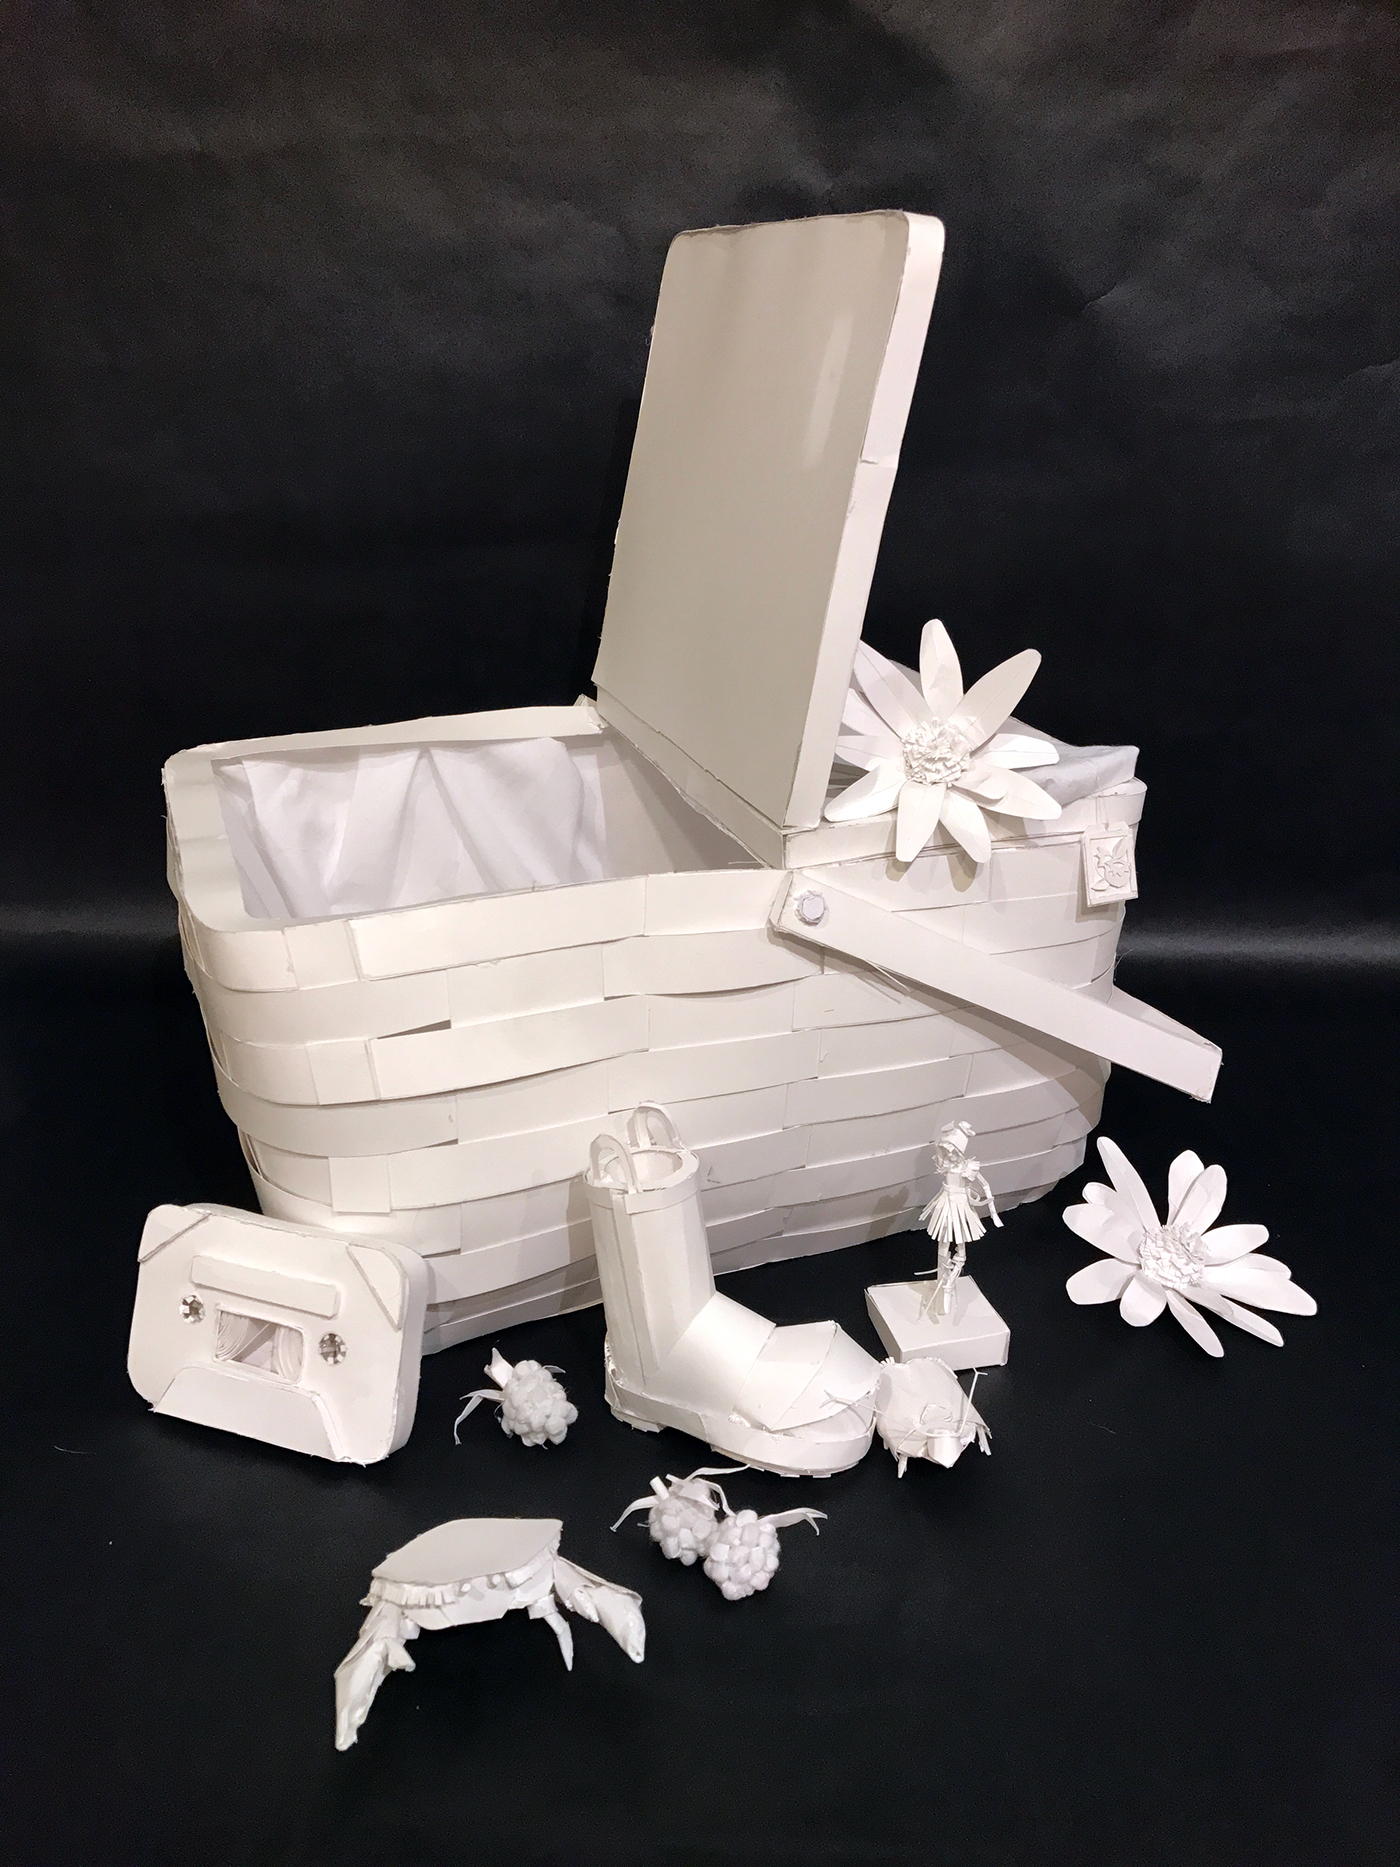 sculpture paper paper art cloth Kit Project